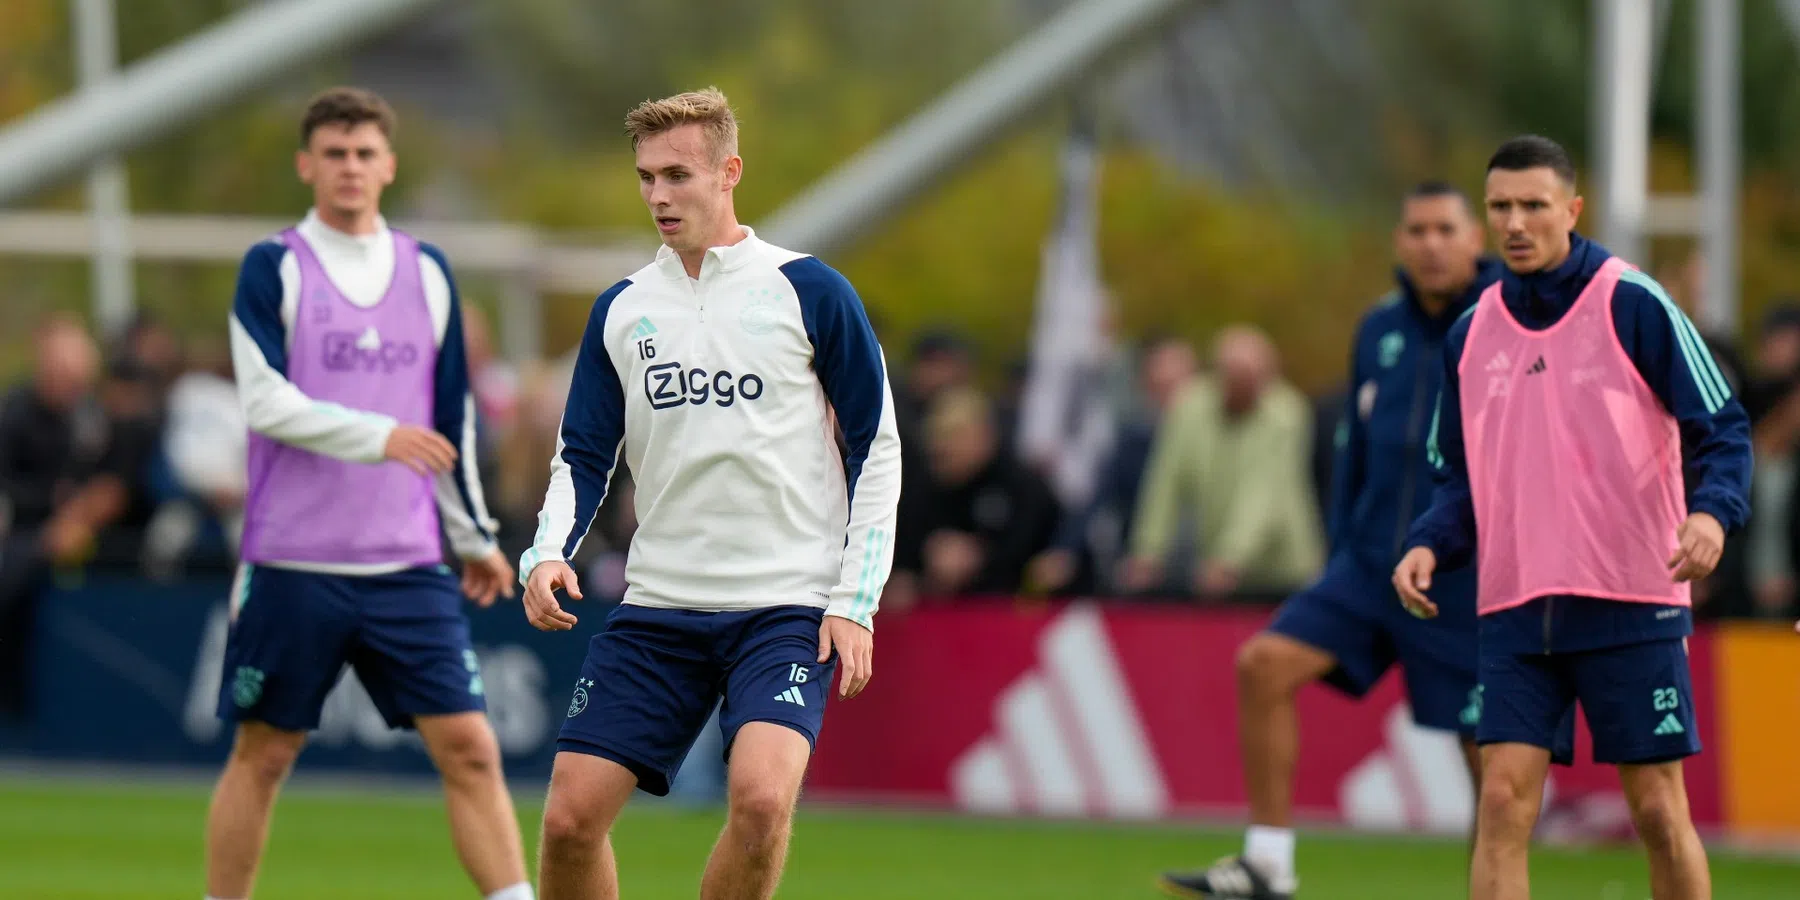 Sivert Mannsverk traint na blessureleed weer mee bij Ajax